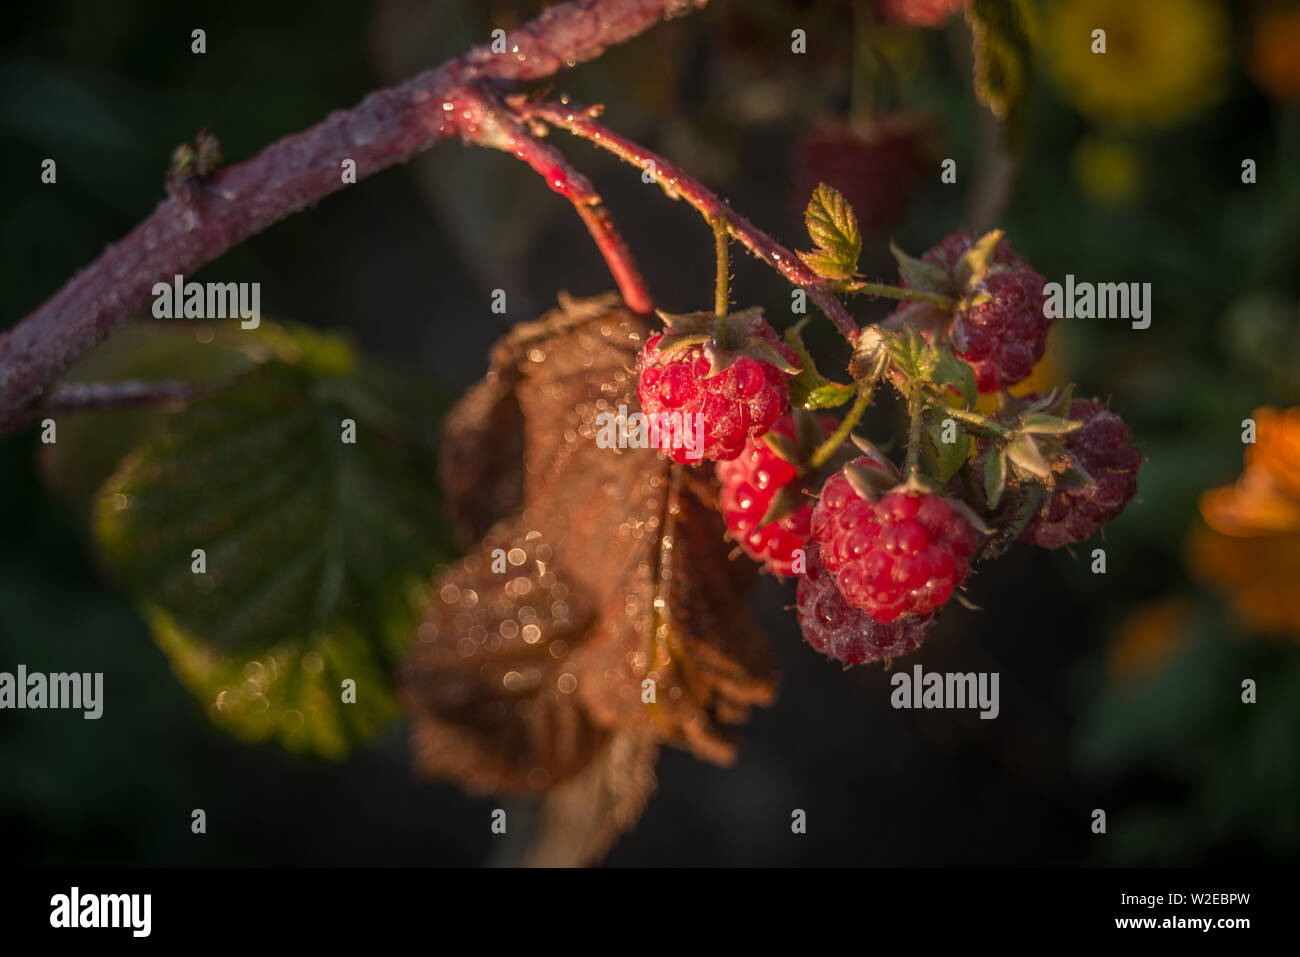 Raspberries on bush Stock Photo